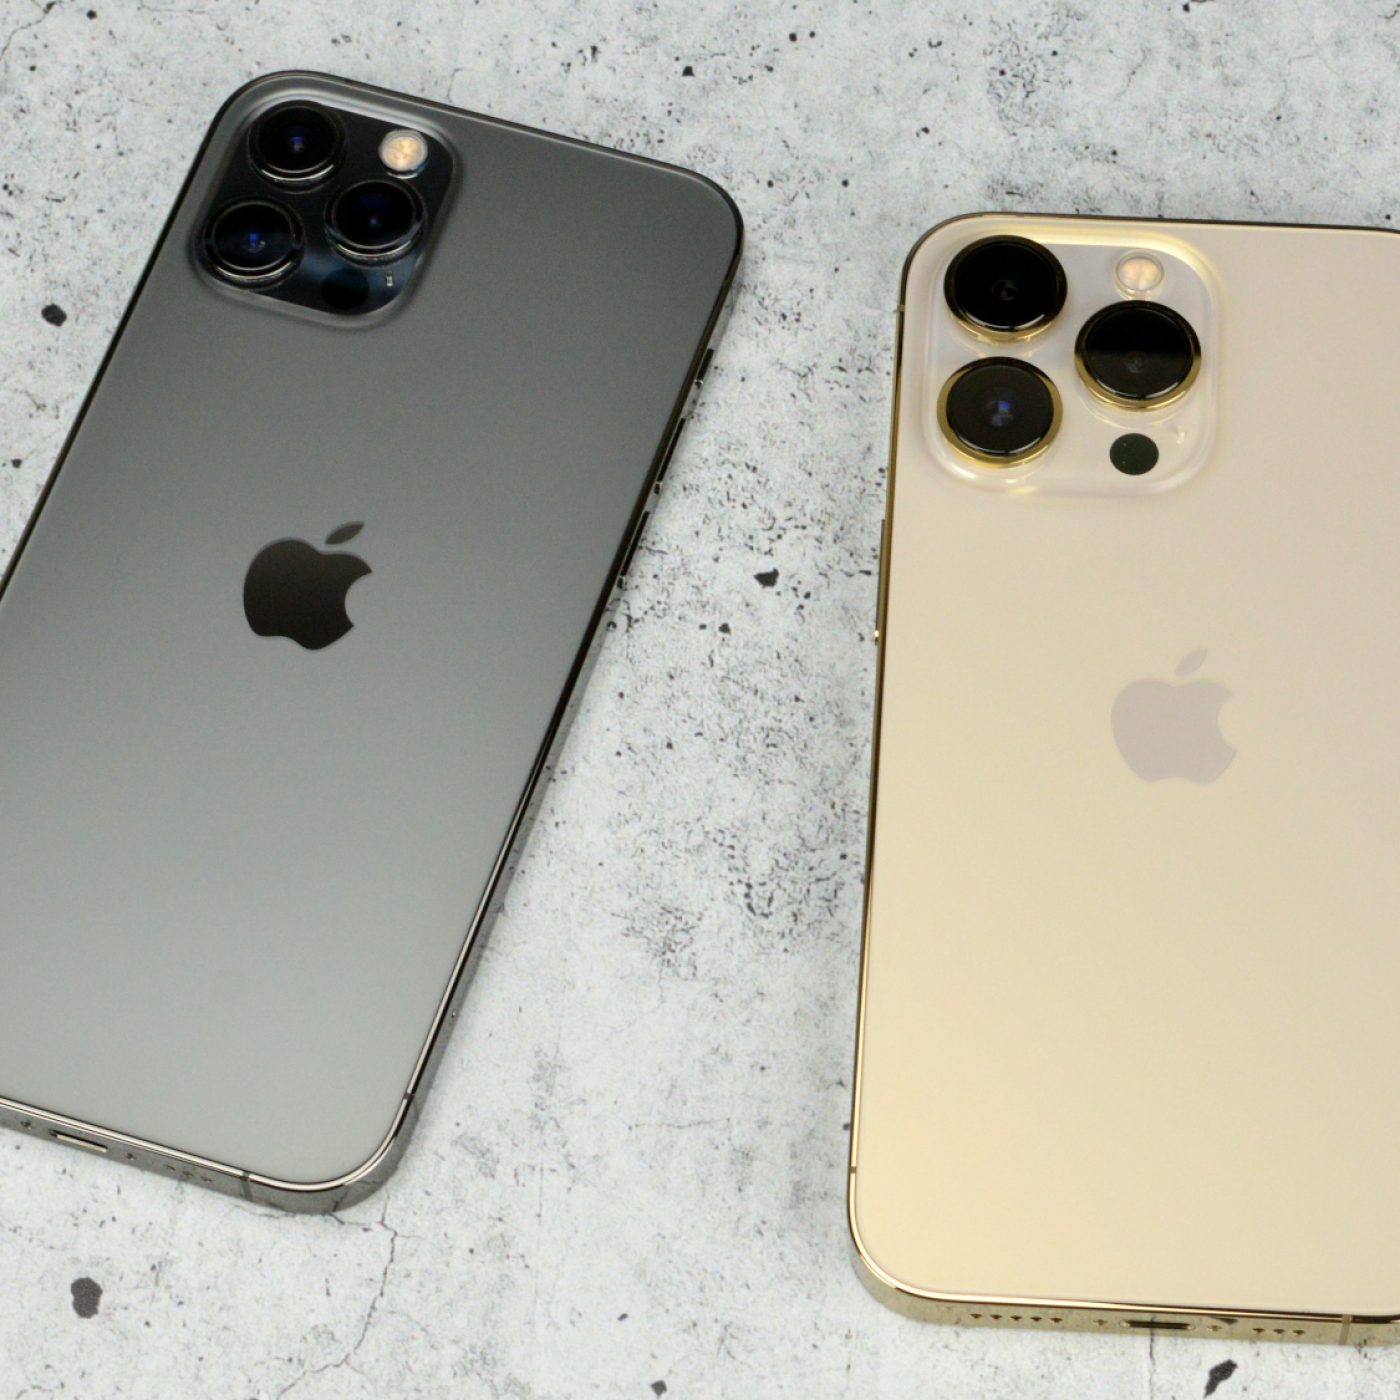 Apple iPhone 13 Pro Max vs iPhone 12 Pro Max